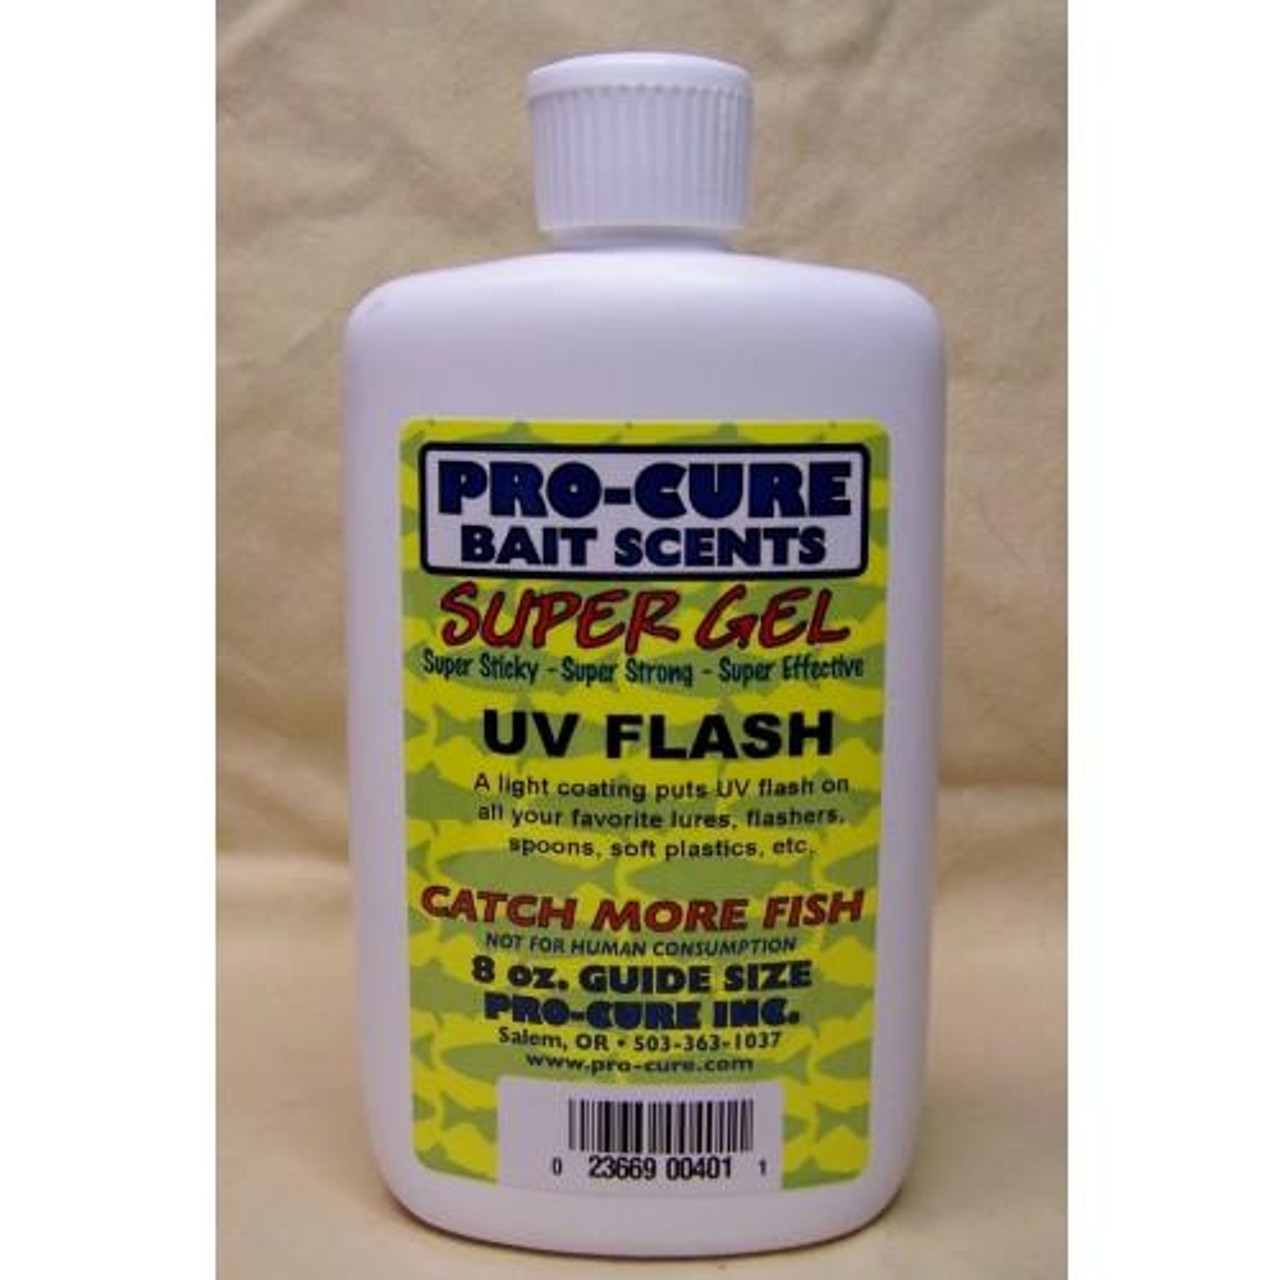 Pro Cure Pure UV Liquid - 2 oz